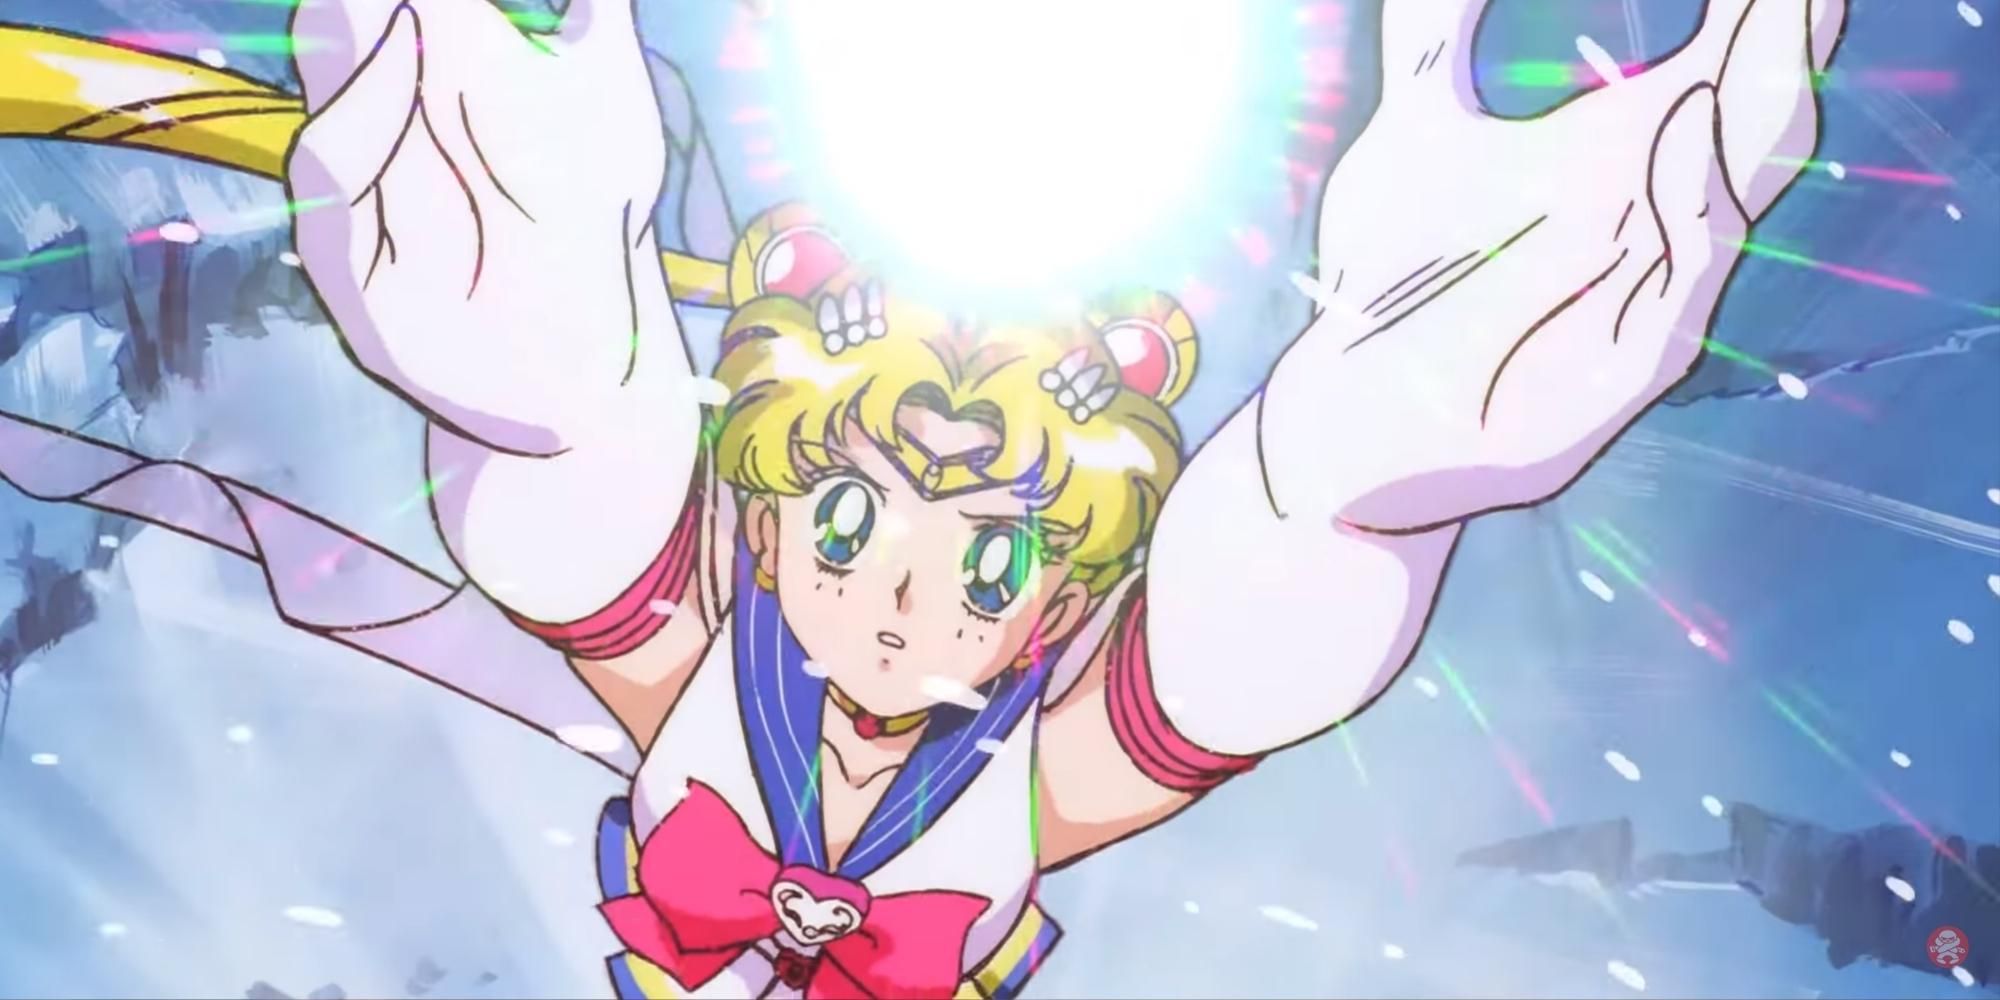   Usagi Tsukino dans Sailor Moon